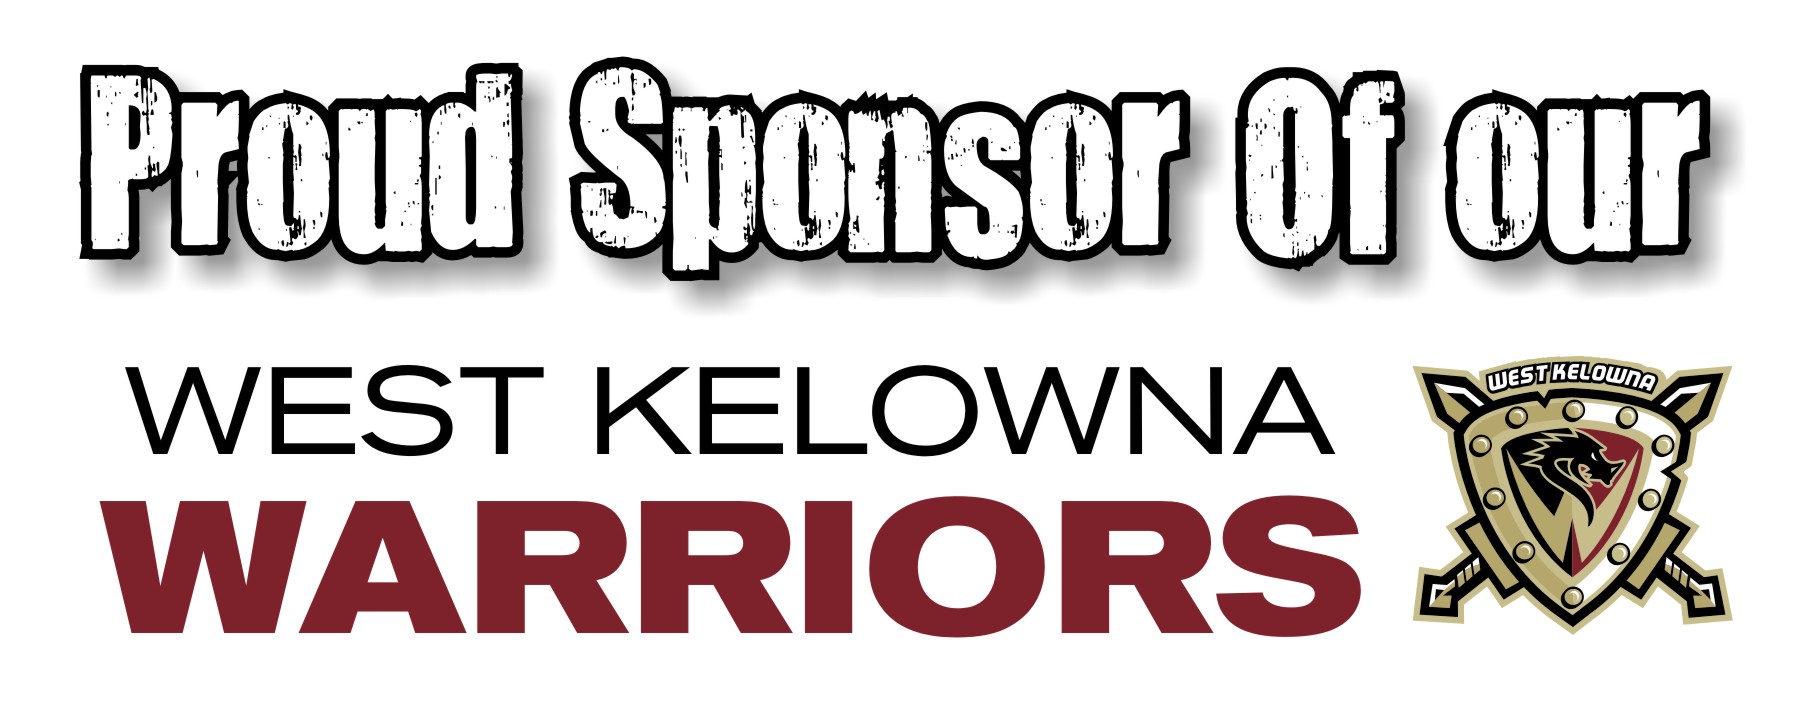 Kelowna and West Kelowna Plumbers - A1 Choice - Sponsor of West Kelowna Warriors